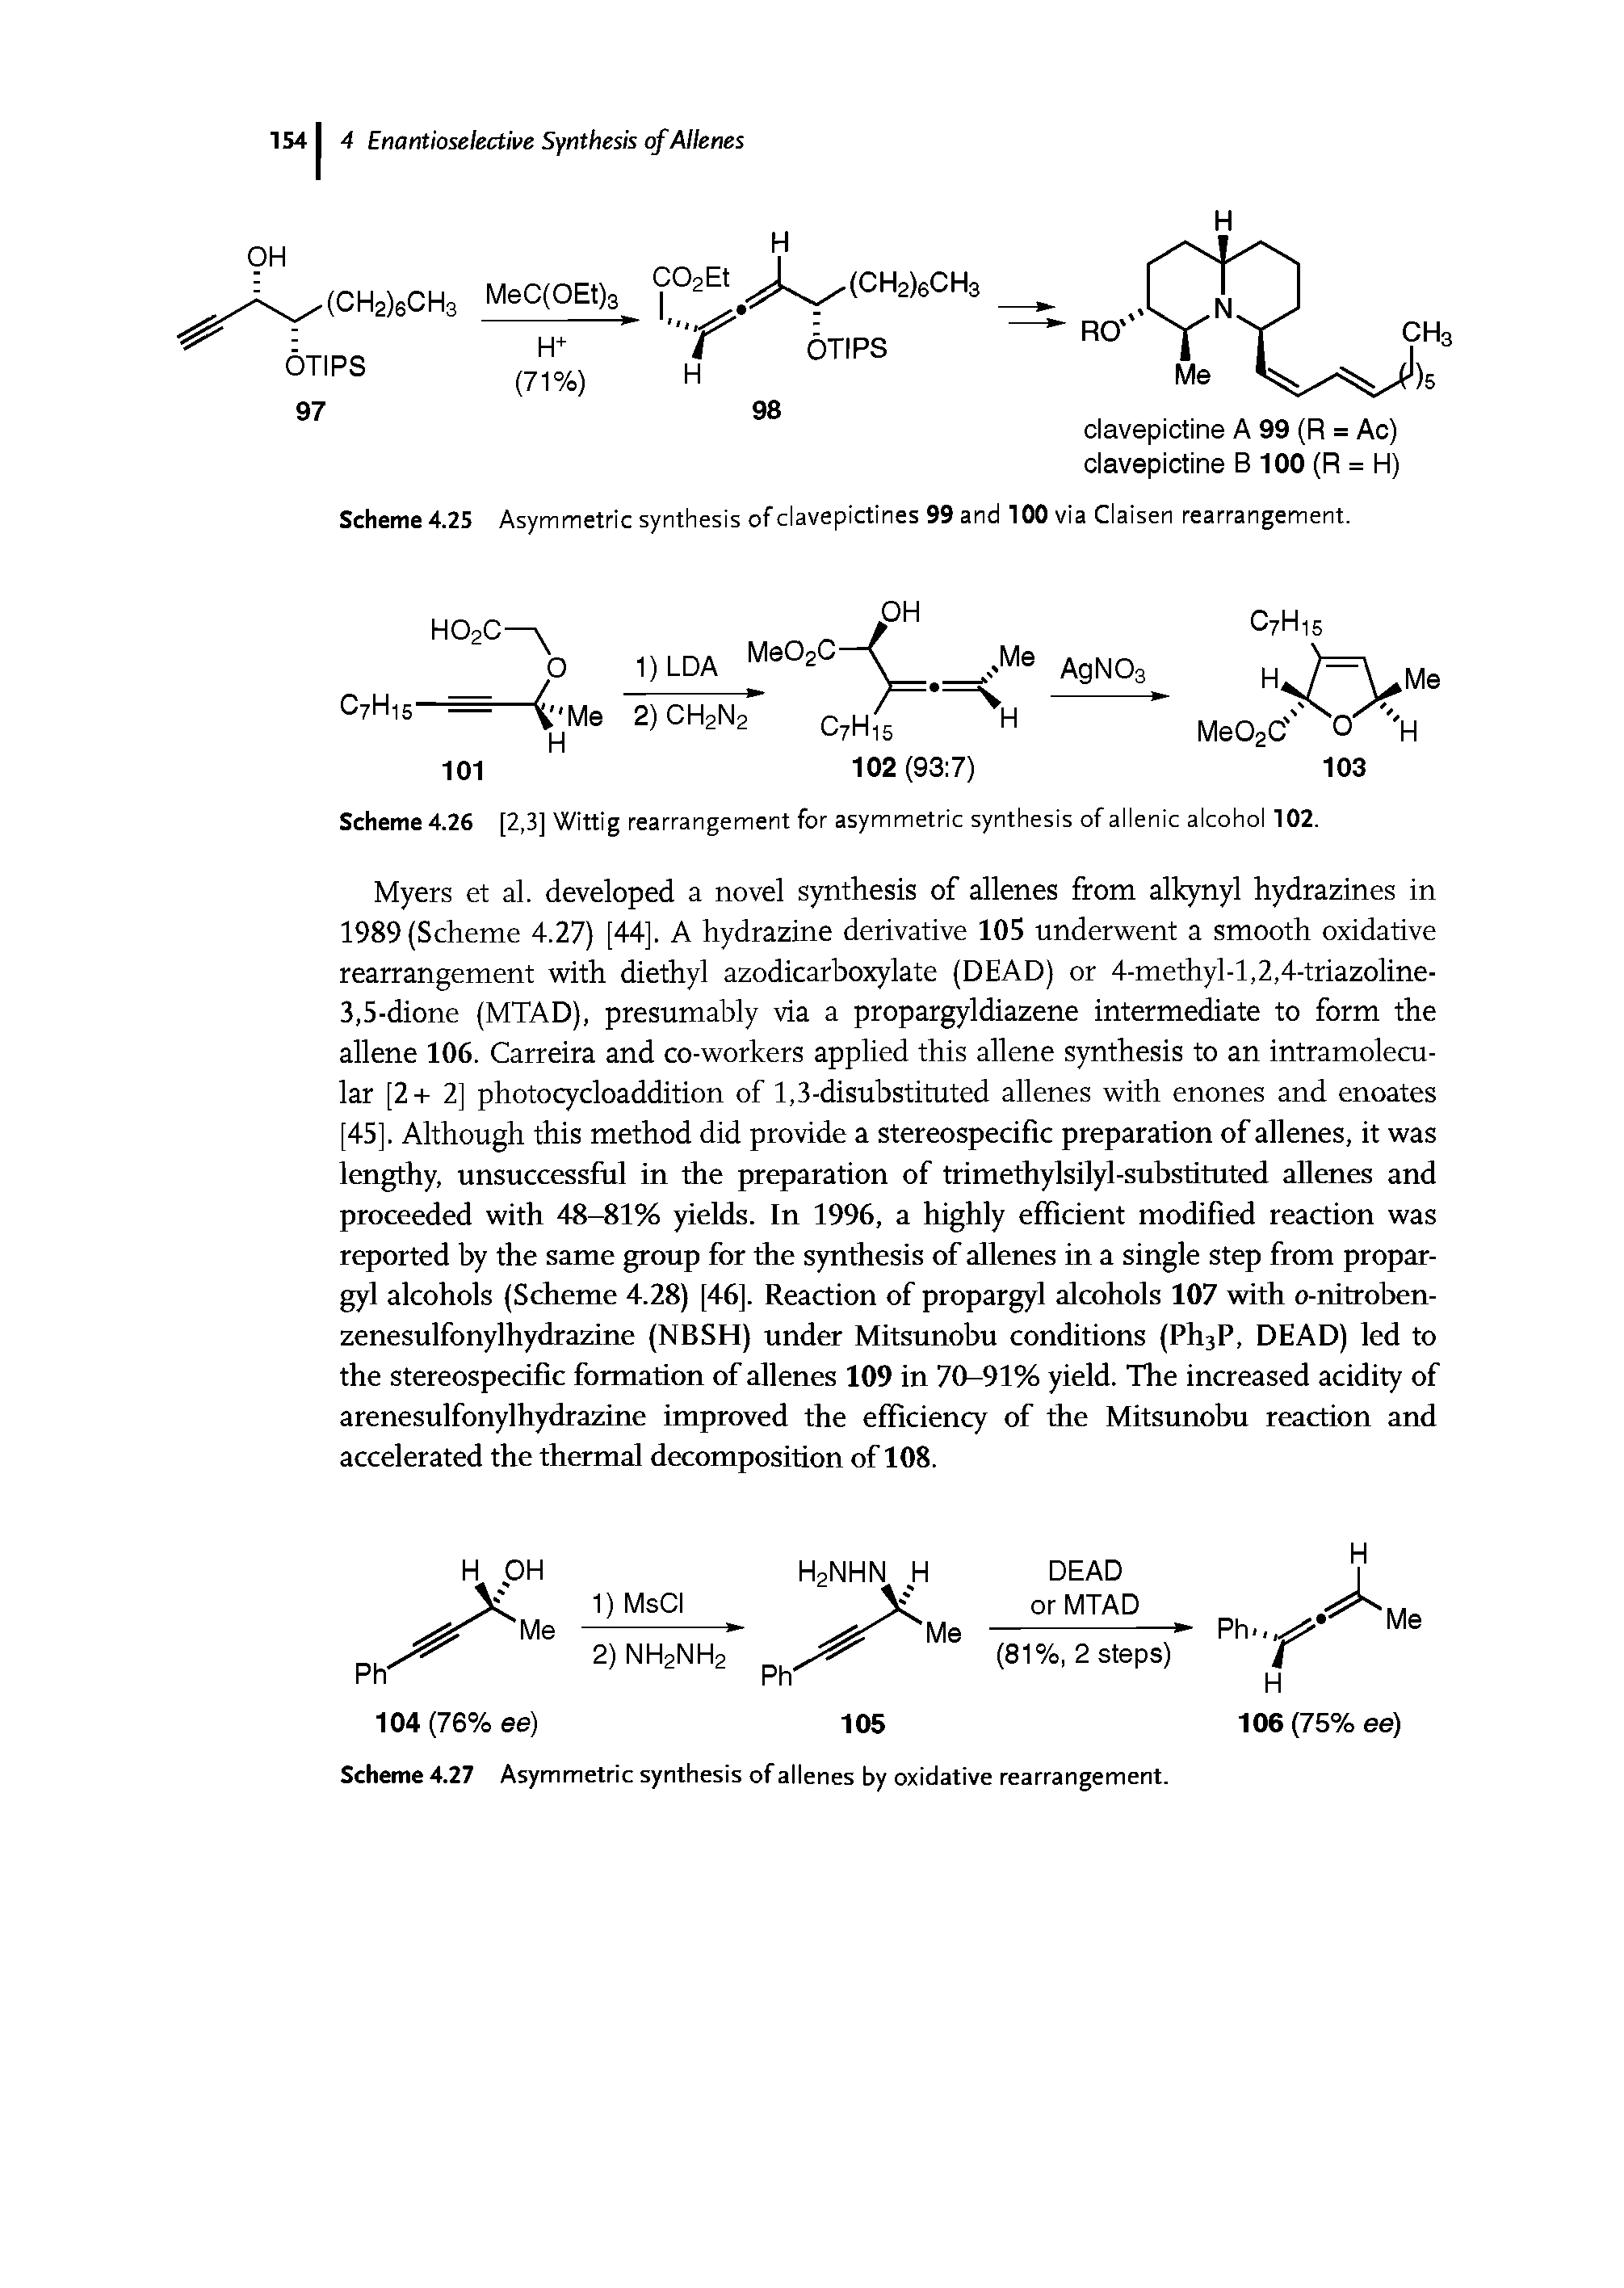 Scheme 4.25 Asymmetric synthesis of clavepictines 99 and 100 via Claisen rearrangement.